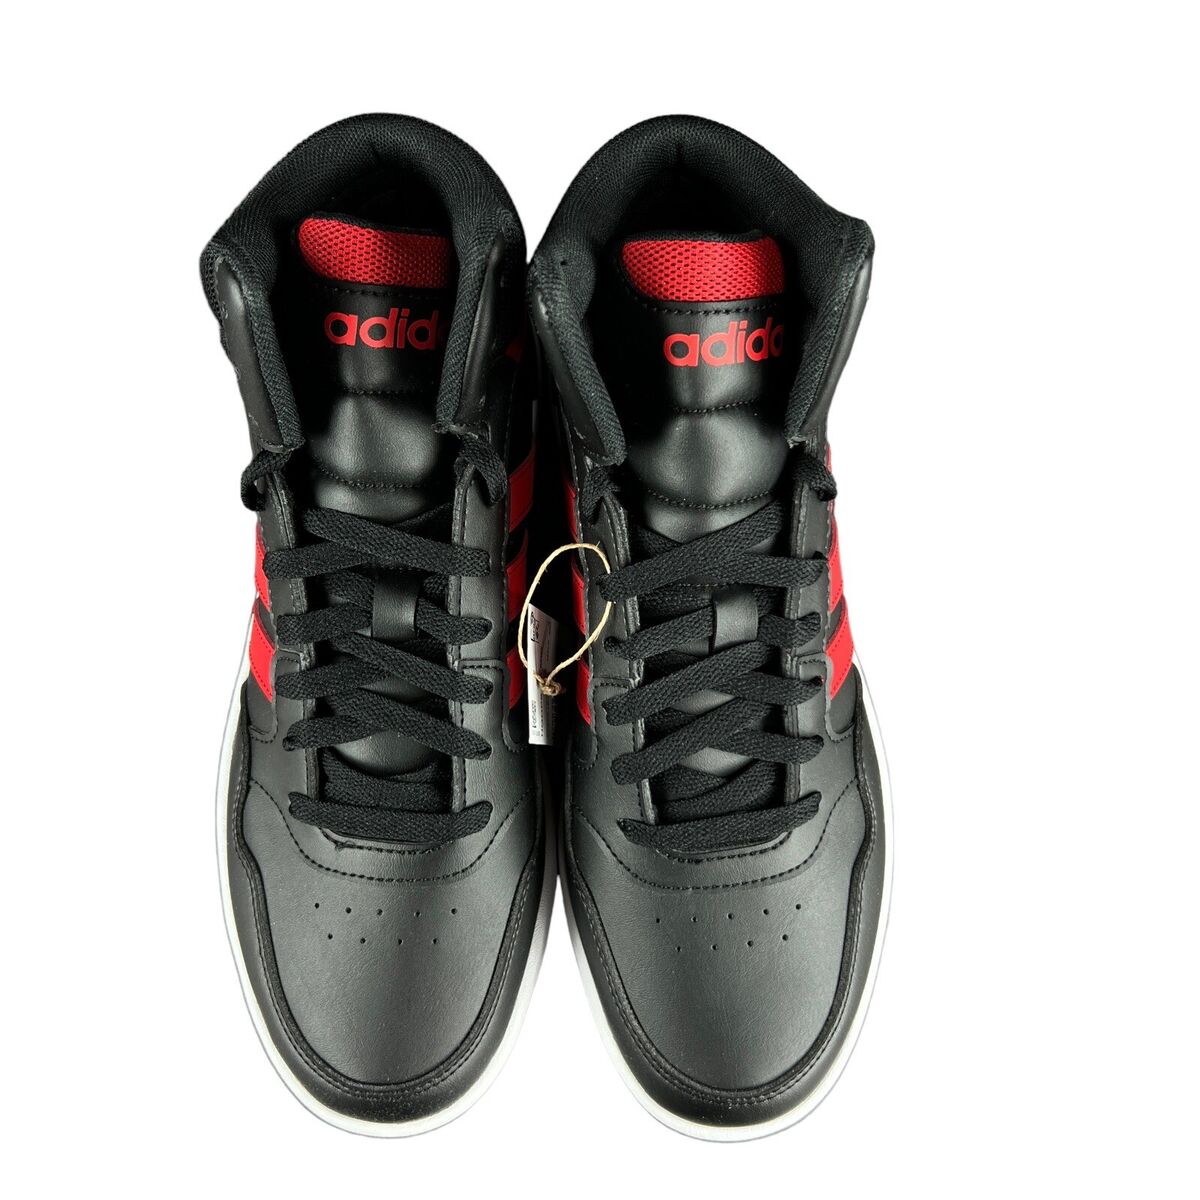 Adidas Hoops 3.0 Mid Black Better Scarlet White Shoes ID9835 Men's Sizes  7.5-13 | eBay